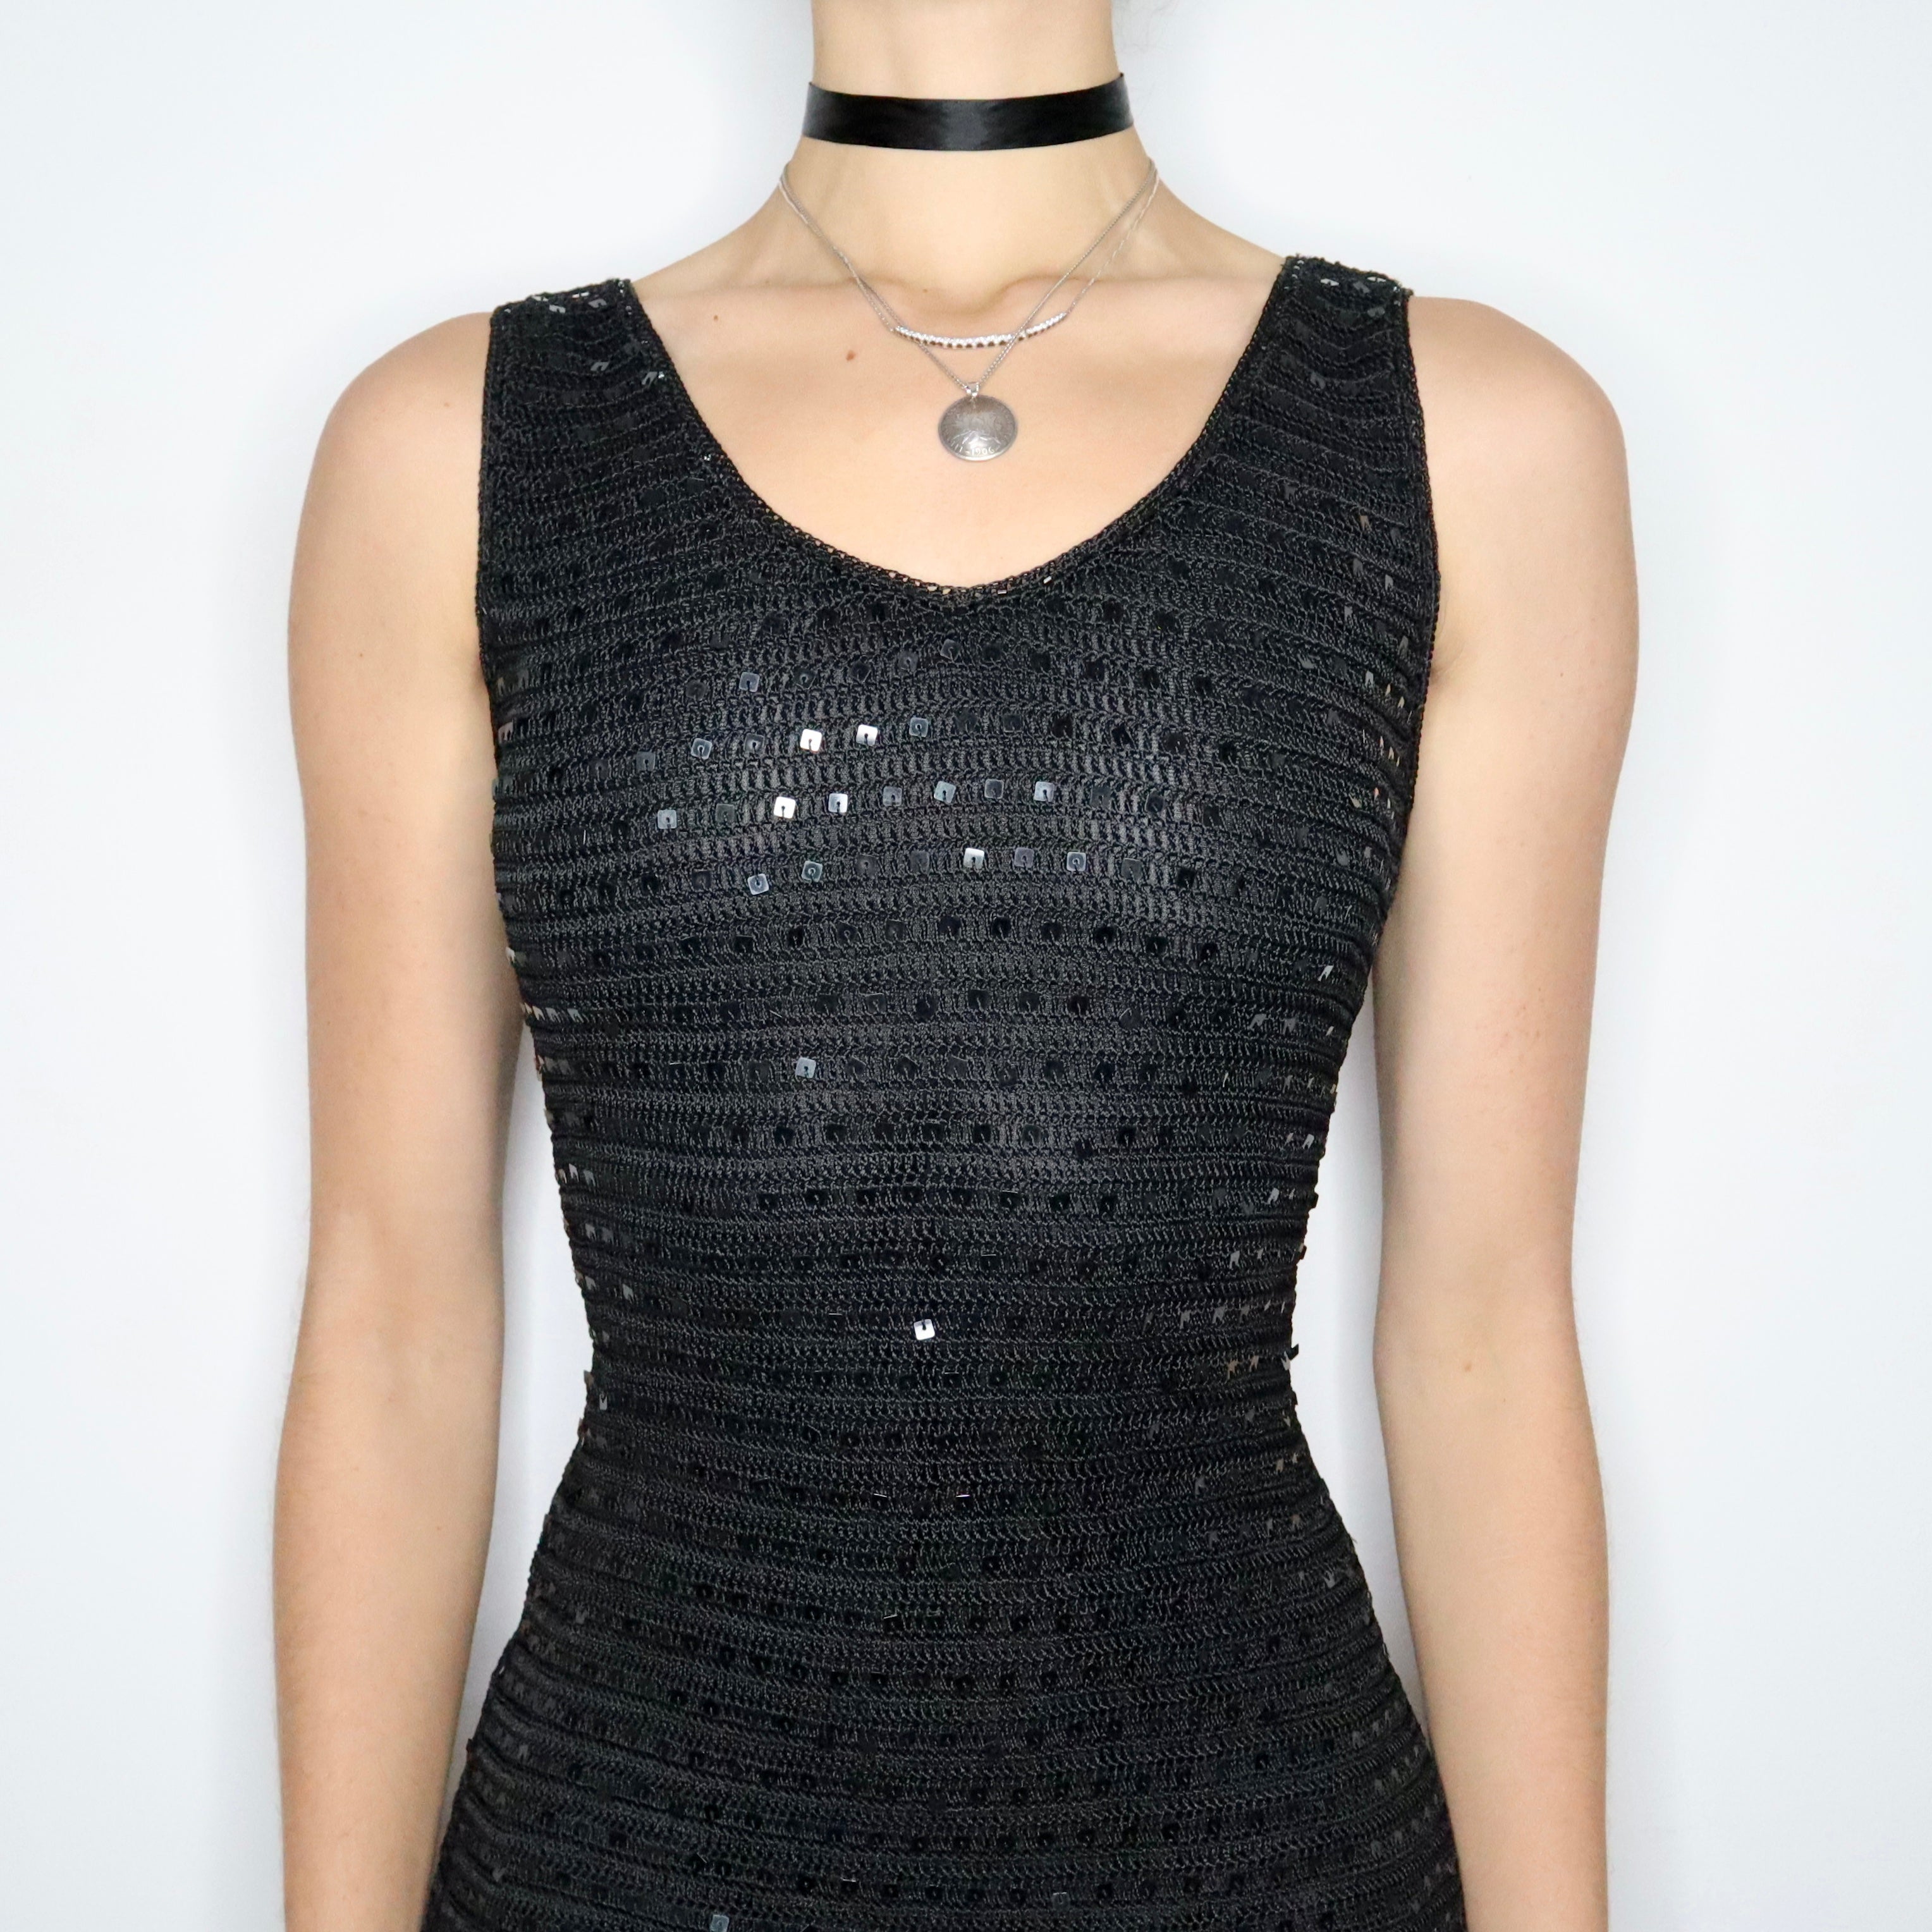 90s Black Sequin Crochet Dress (M/L)